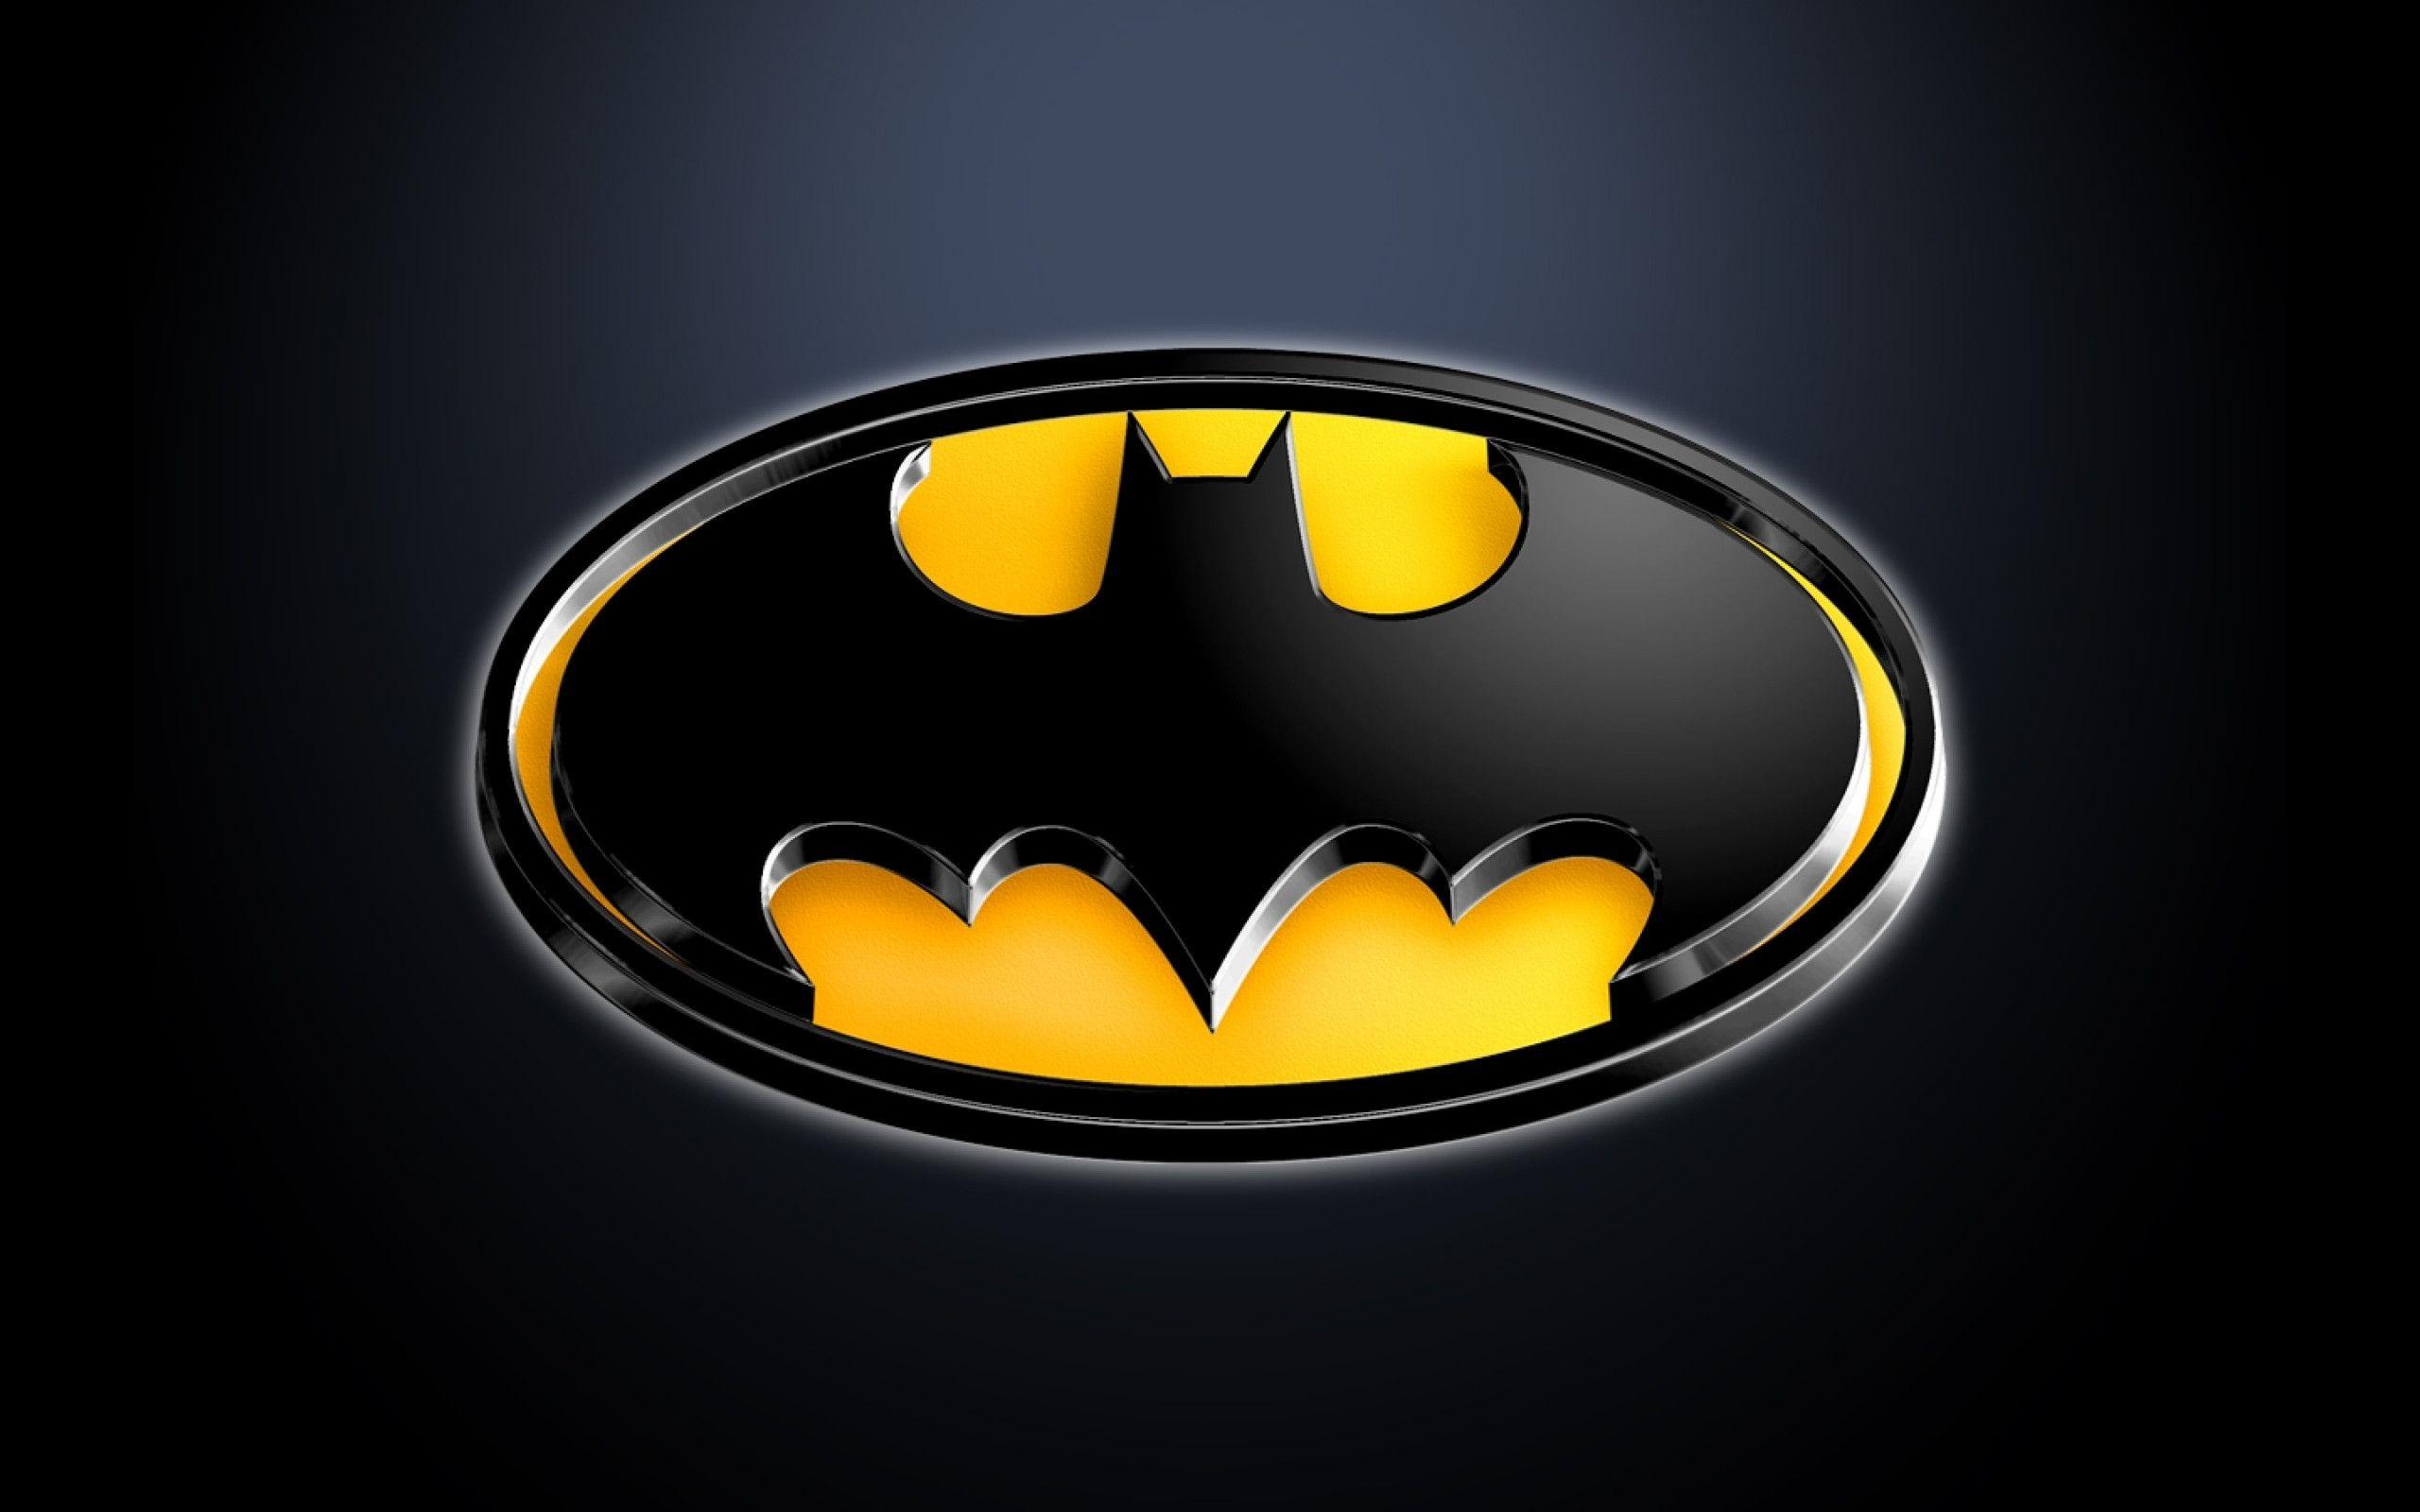 Batman 1080P, 2K, 4K, 5K HD wallpapers free download